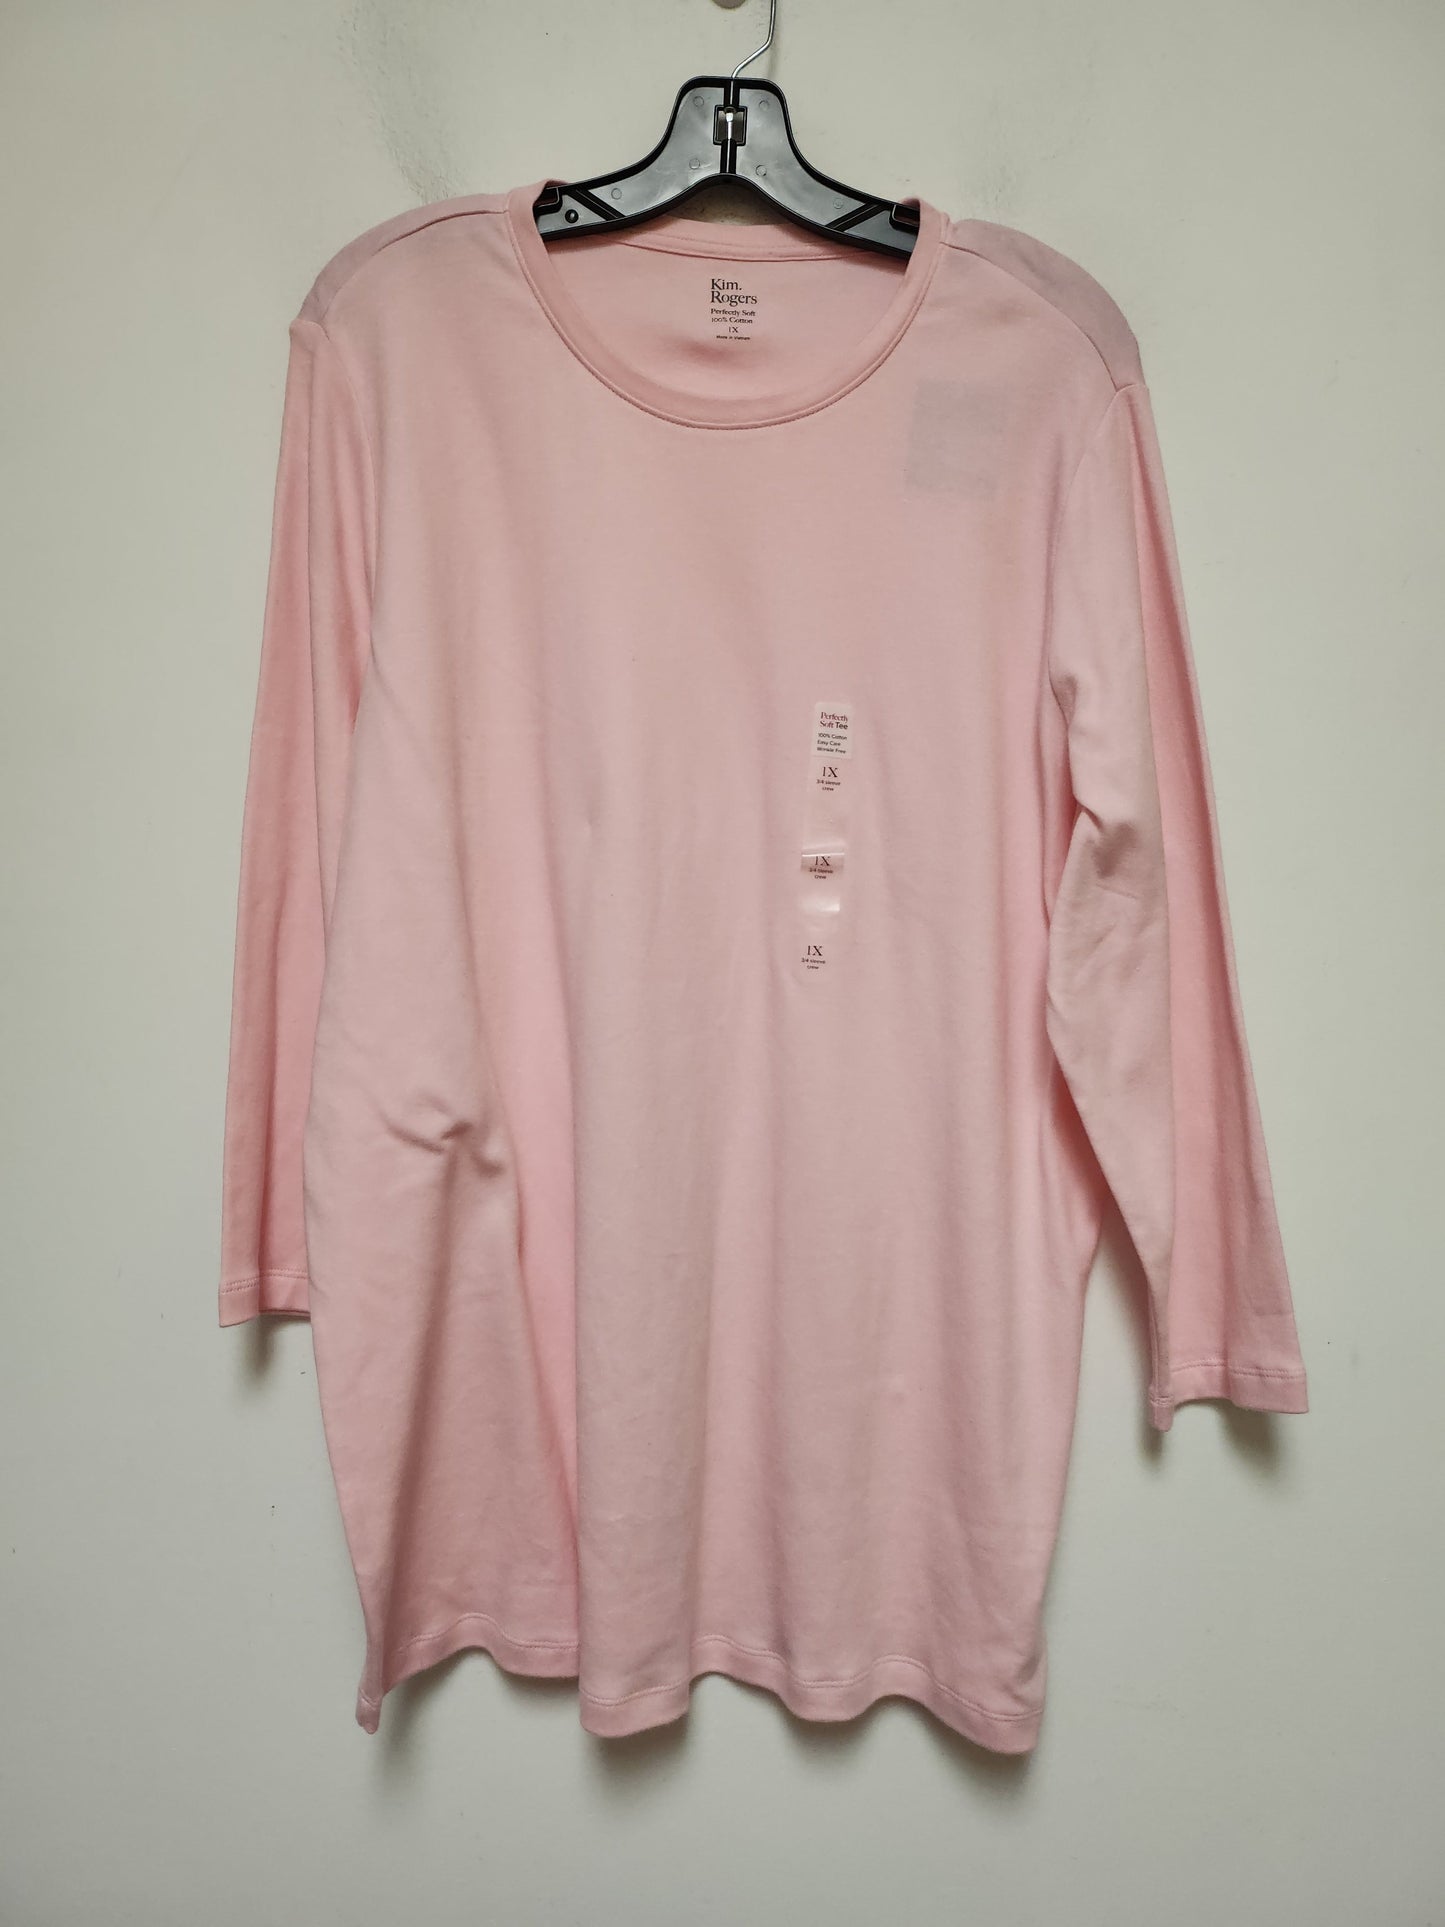 Pink Top Long Sleeve Basic Kim Rogers, Size 1x